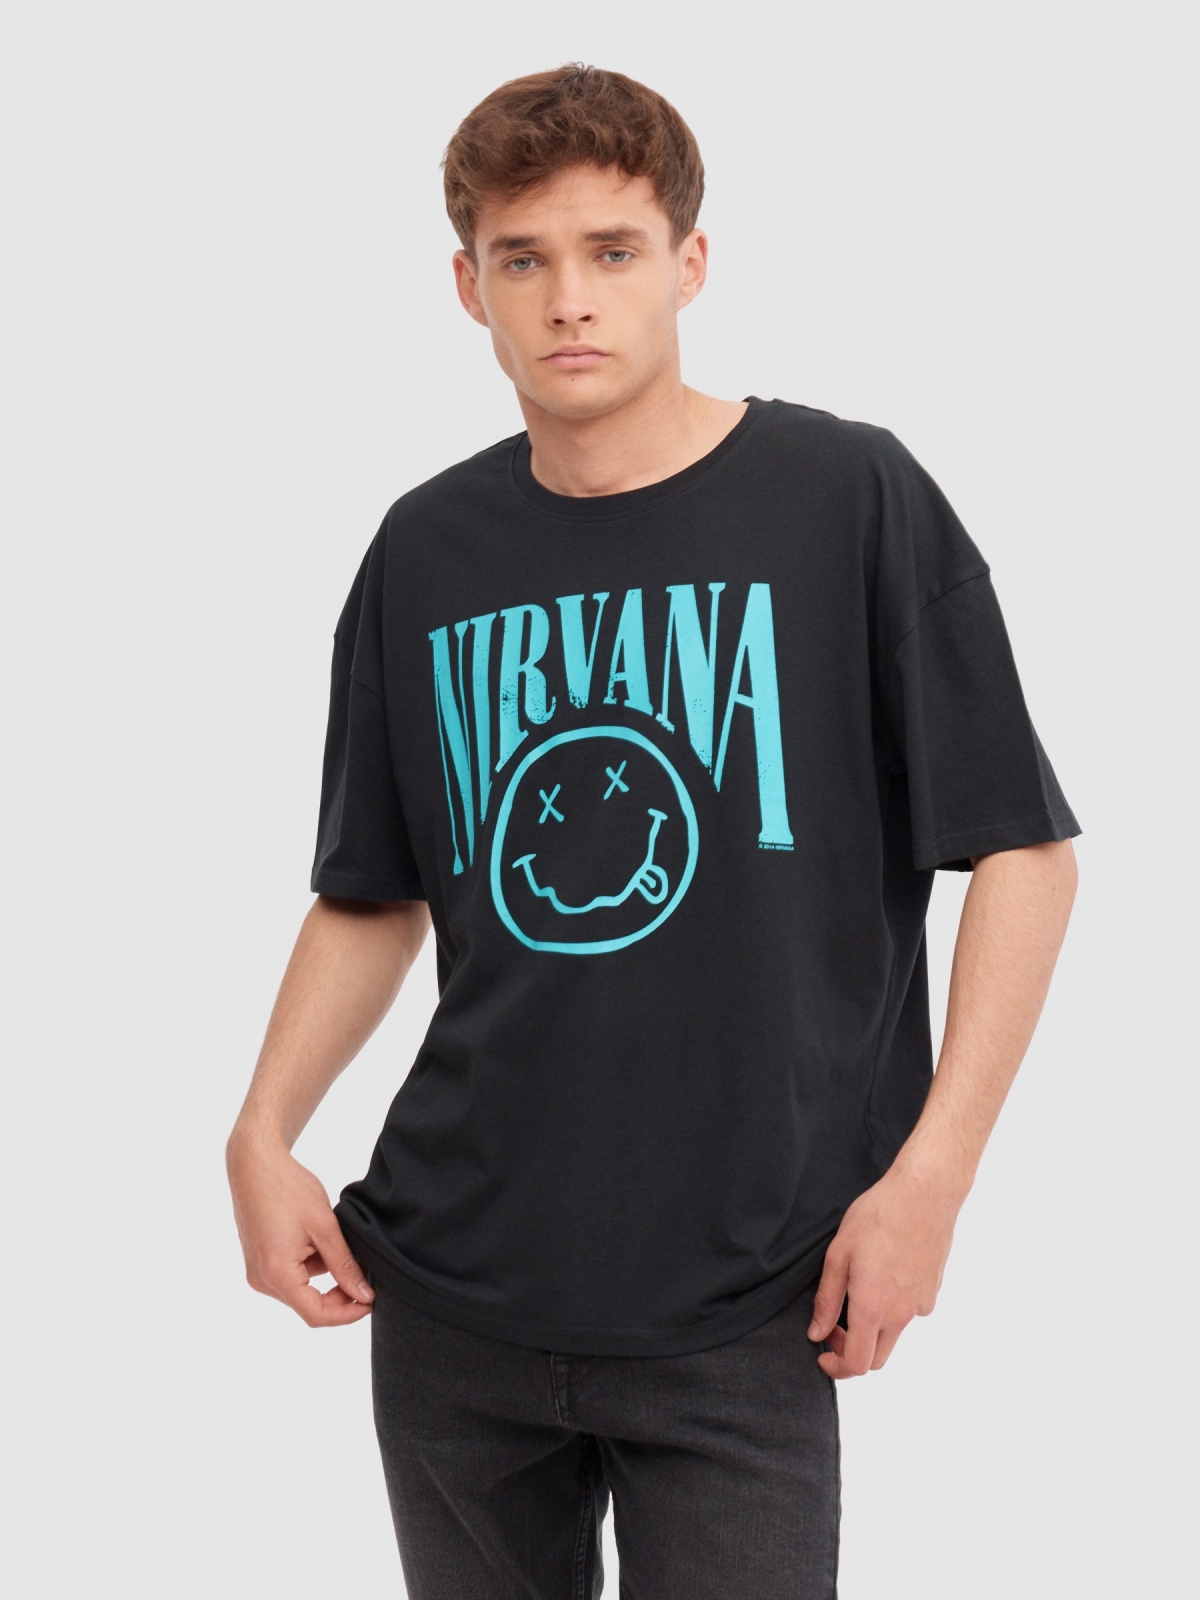 Camiseta Nirvana negro vista media frontal